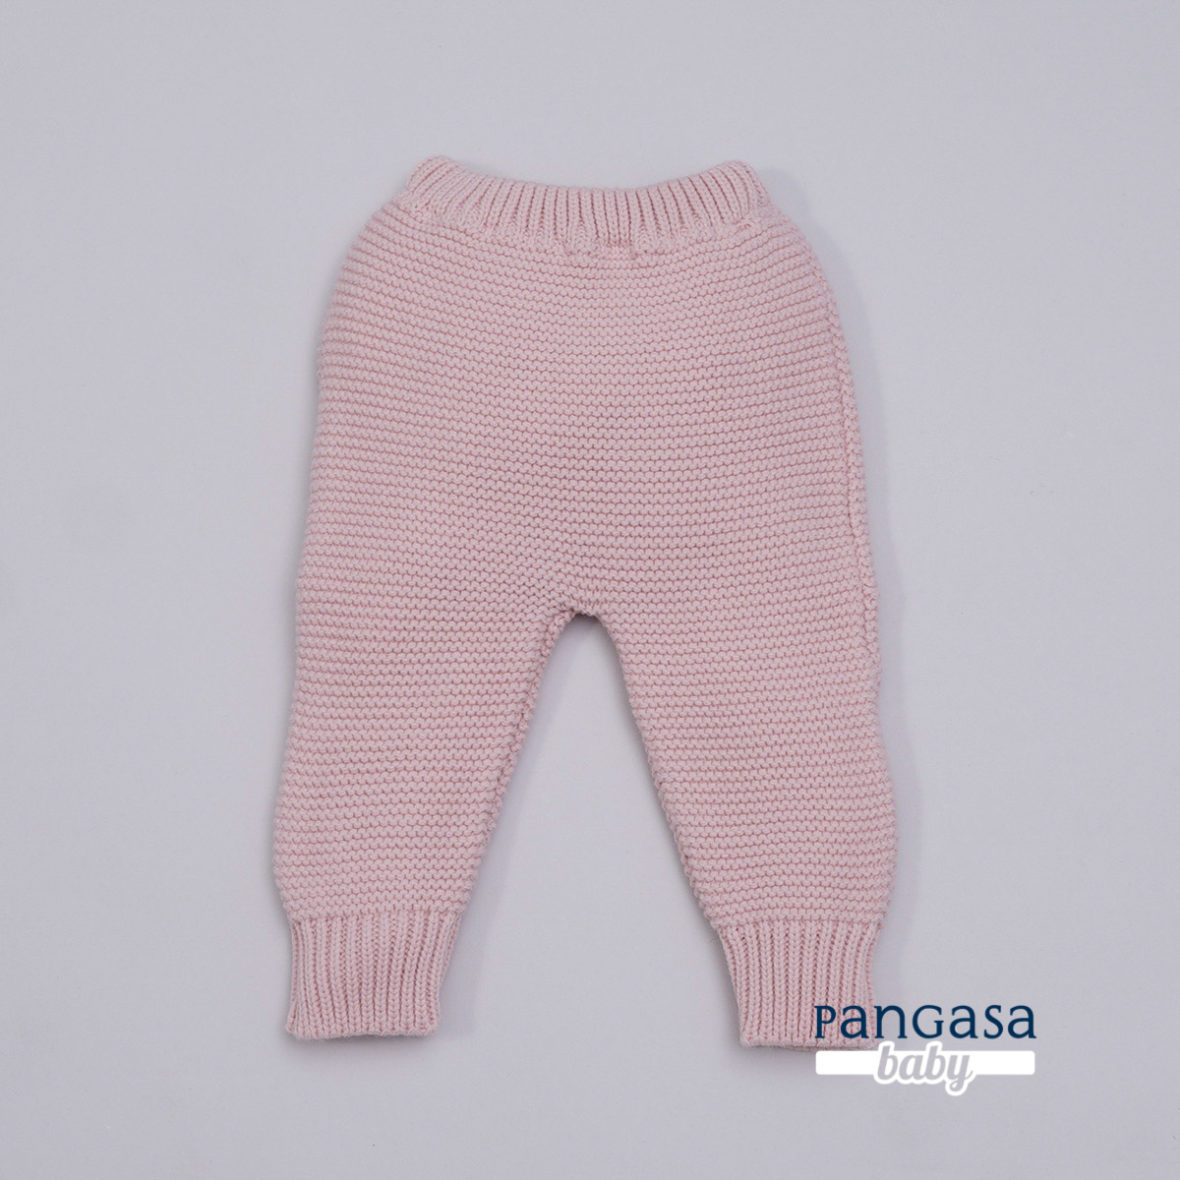 Pantalón links de Pangasa rosa empolvado para tu bebé